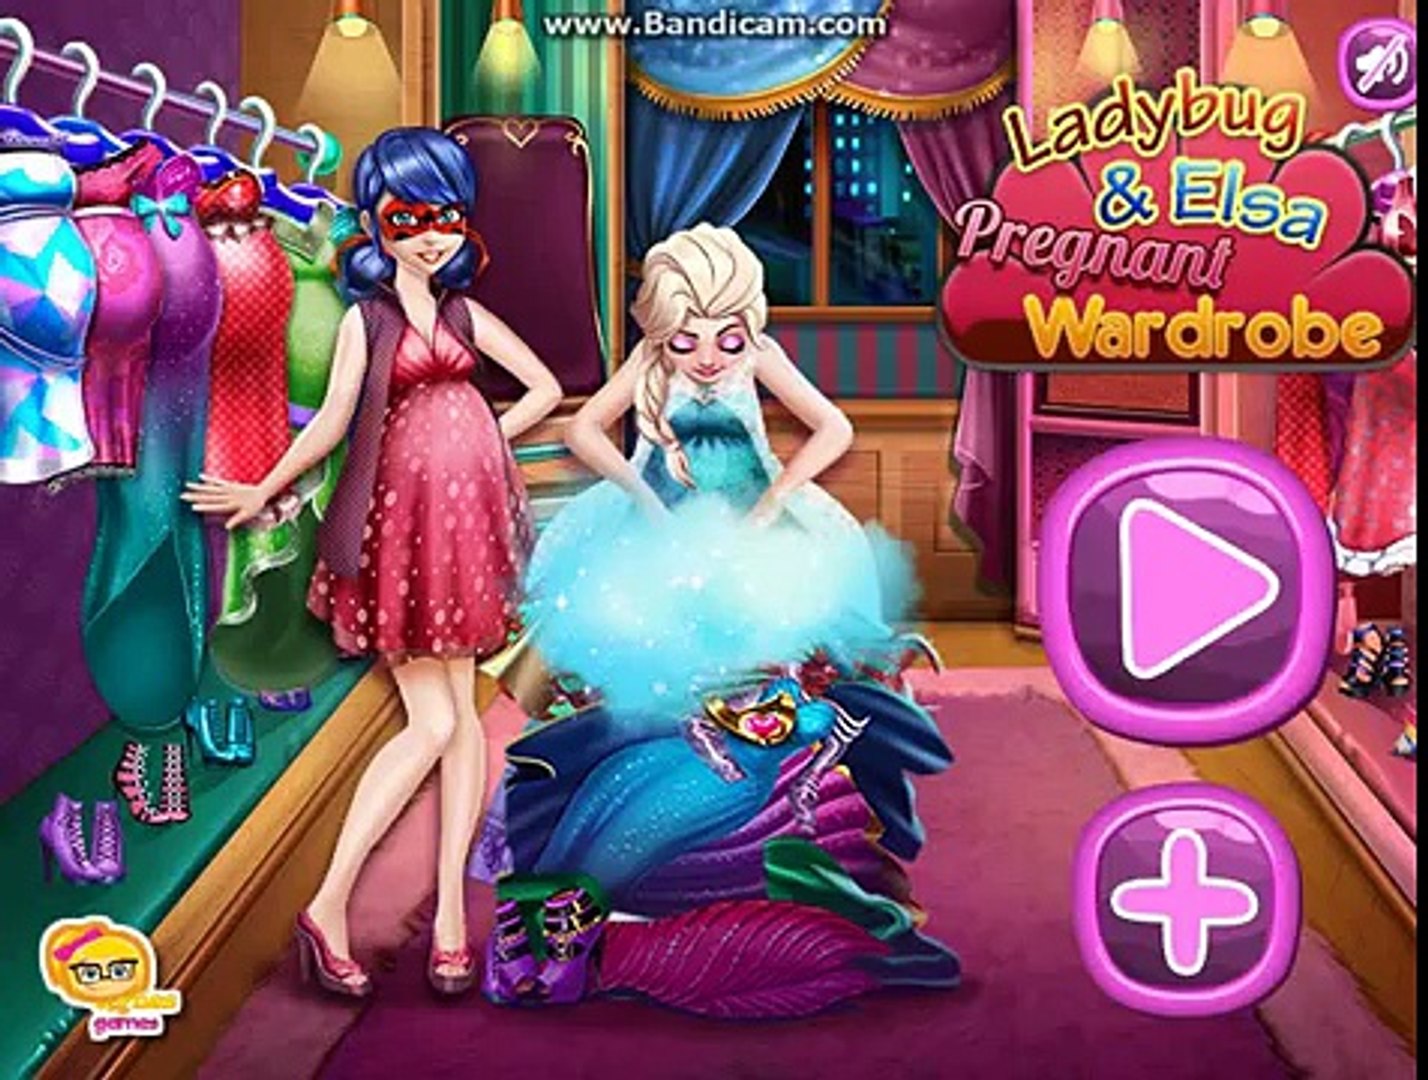 Ladybug And Elsa Pregnant Wardrobe - Miraculous Ladybug & Frozen Queen Elsa Game